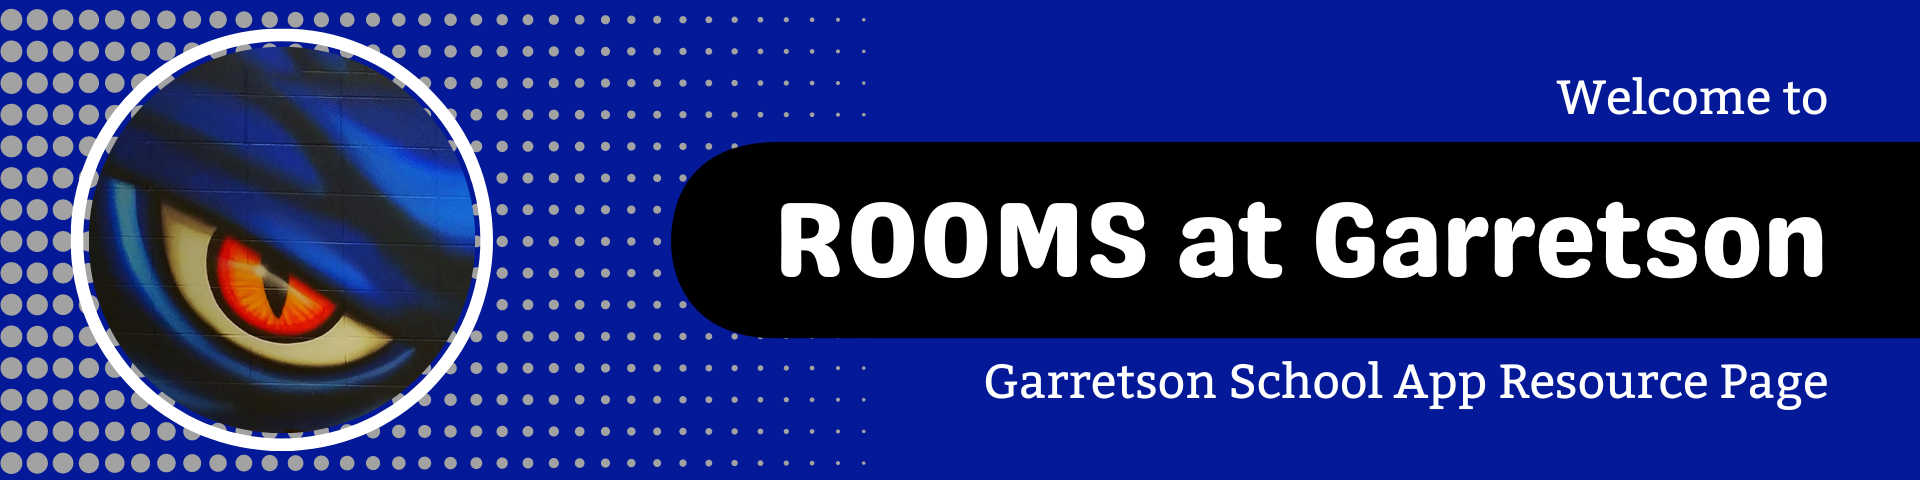 Garretson Rooms Header